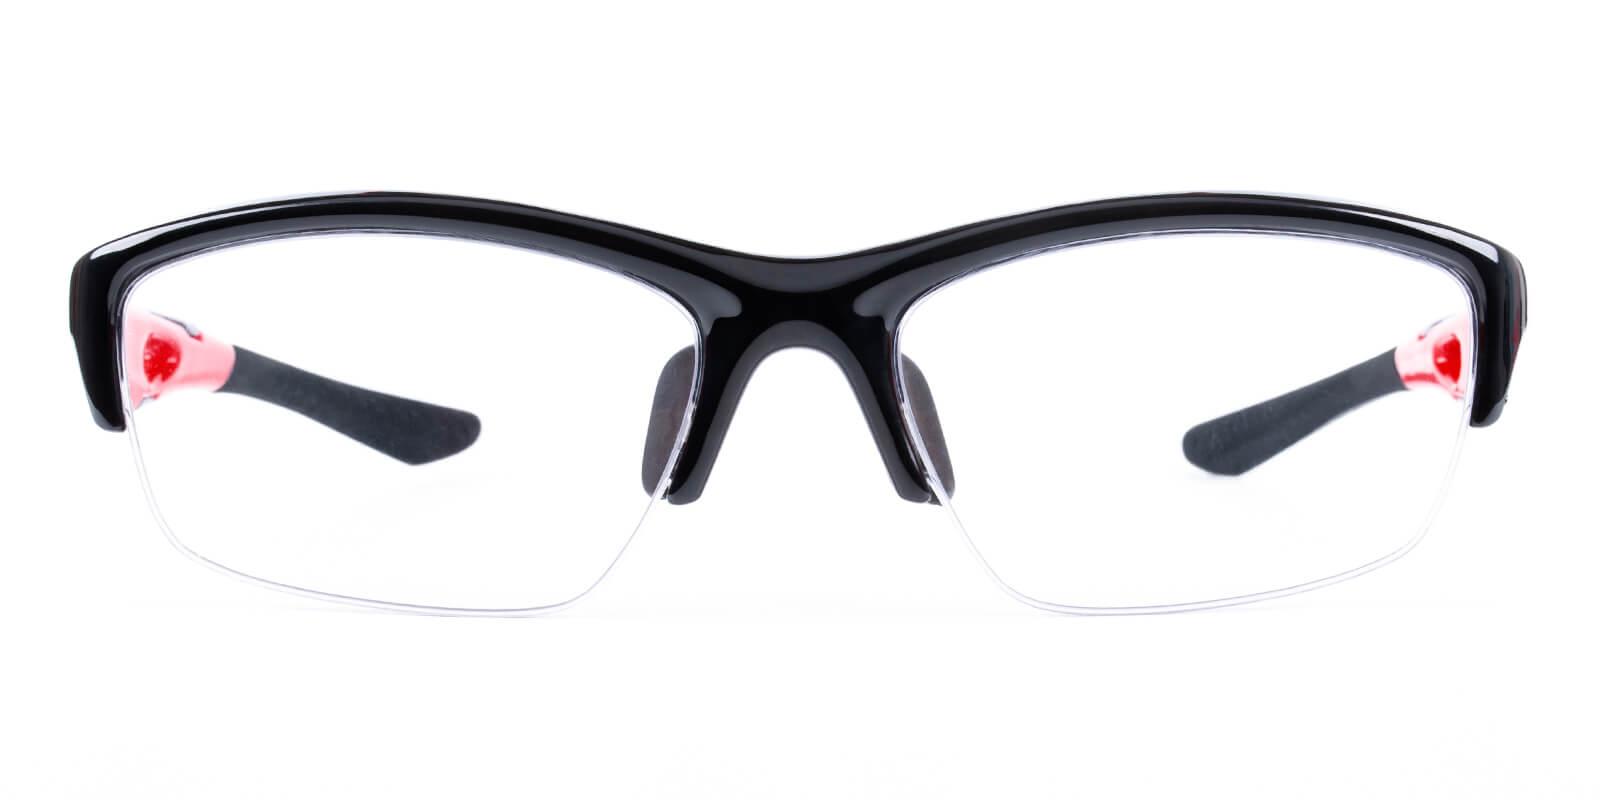 Philips-Red-Rectangle-TR-SportsGlasses-detail